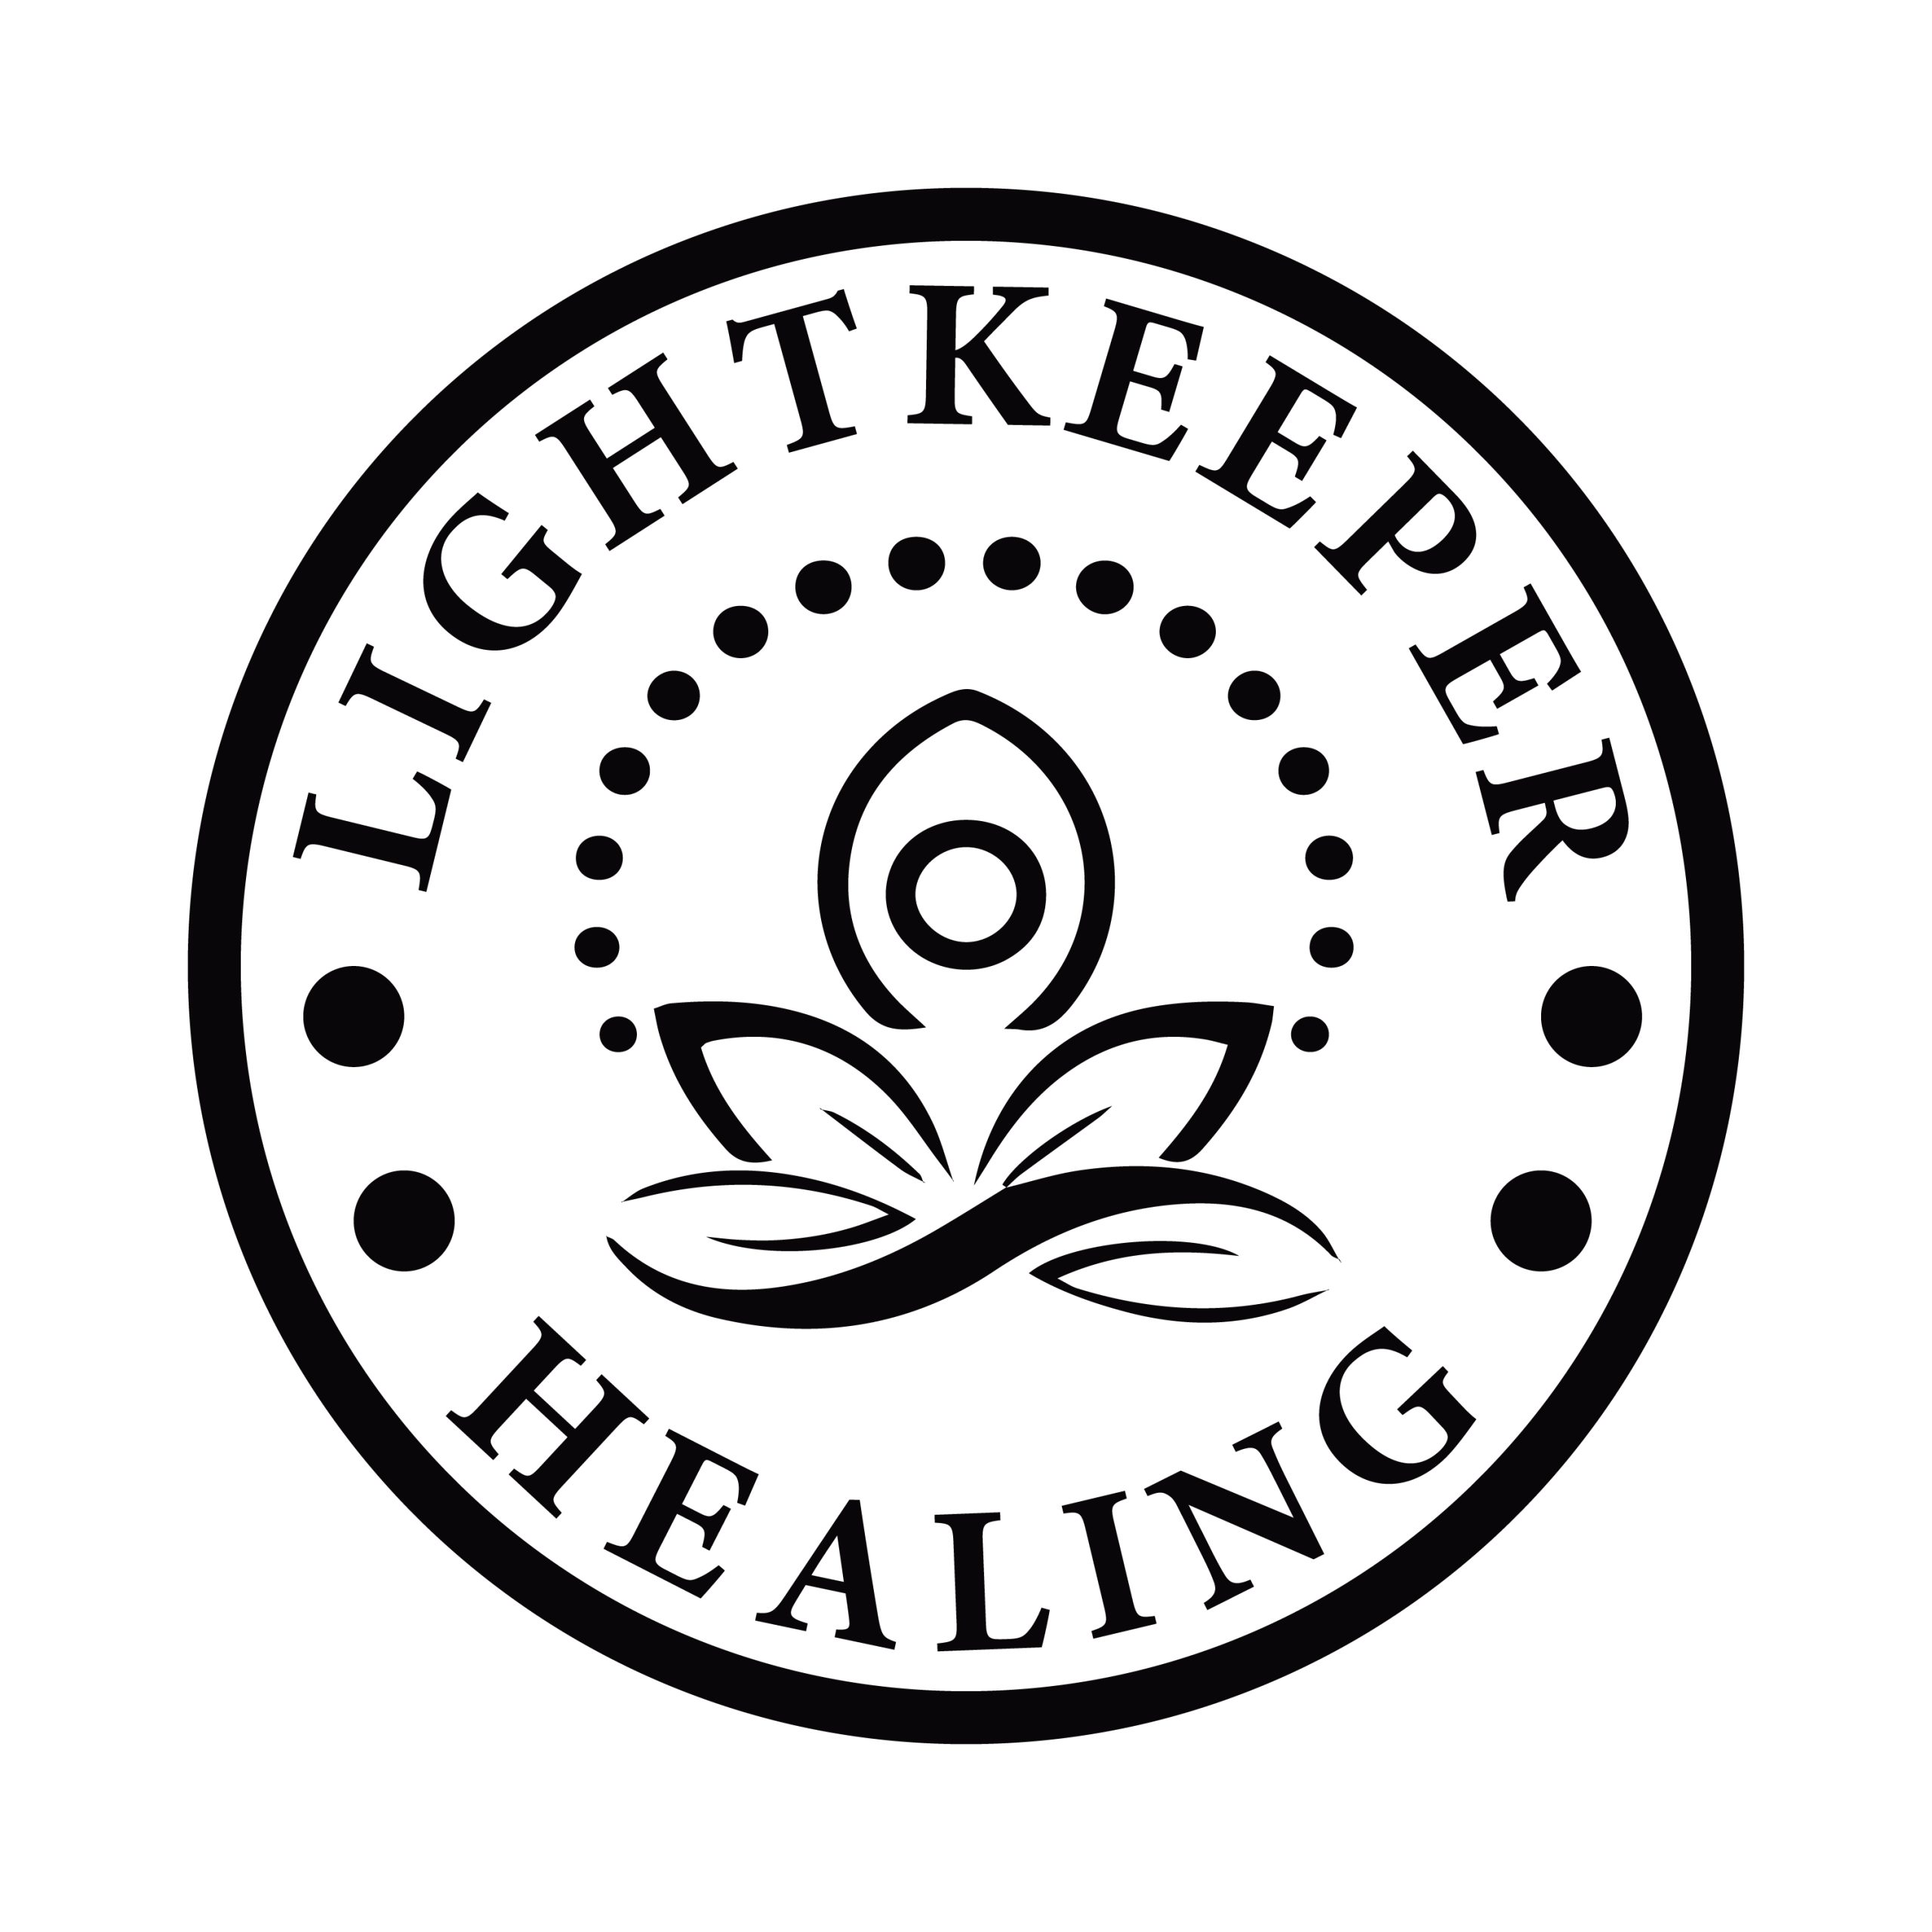 Tečaj – Lightkeeper healing tečaj 1. stopnja 7